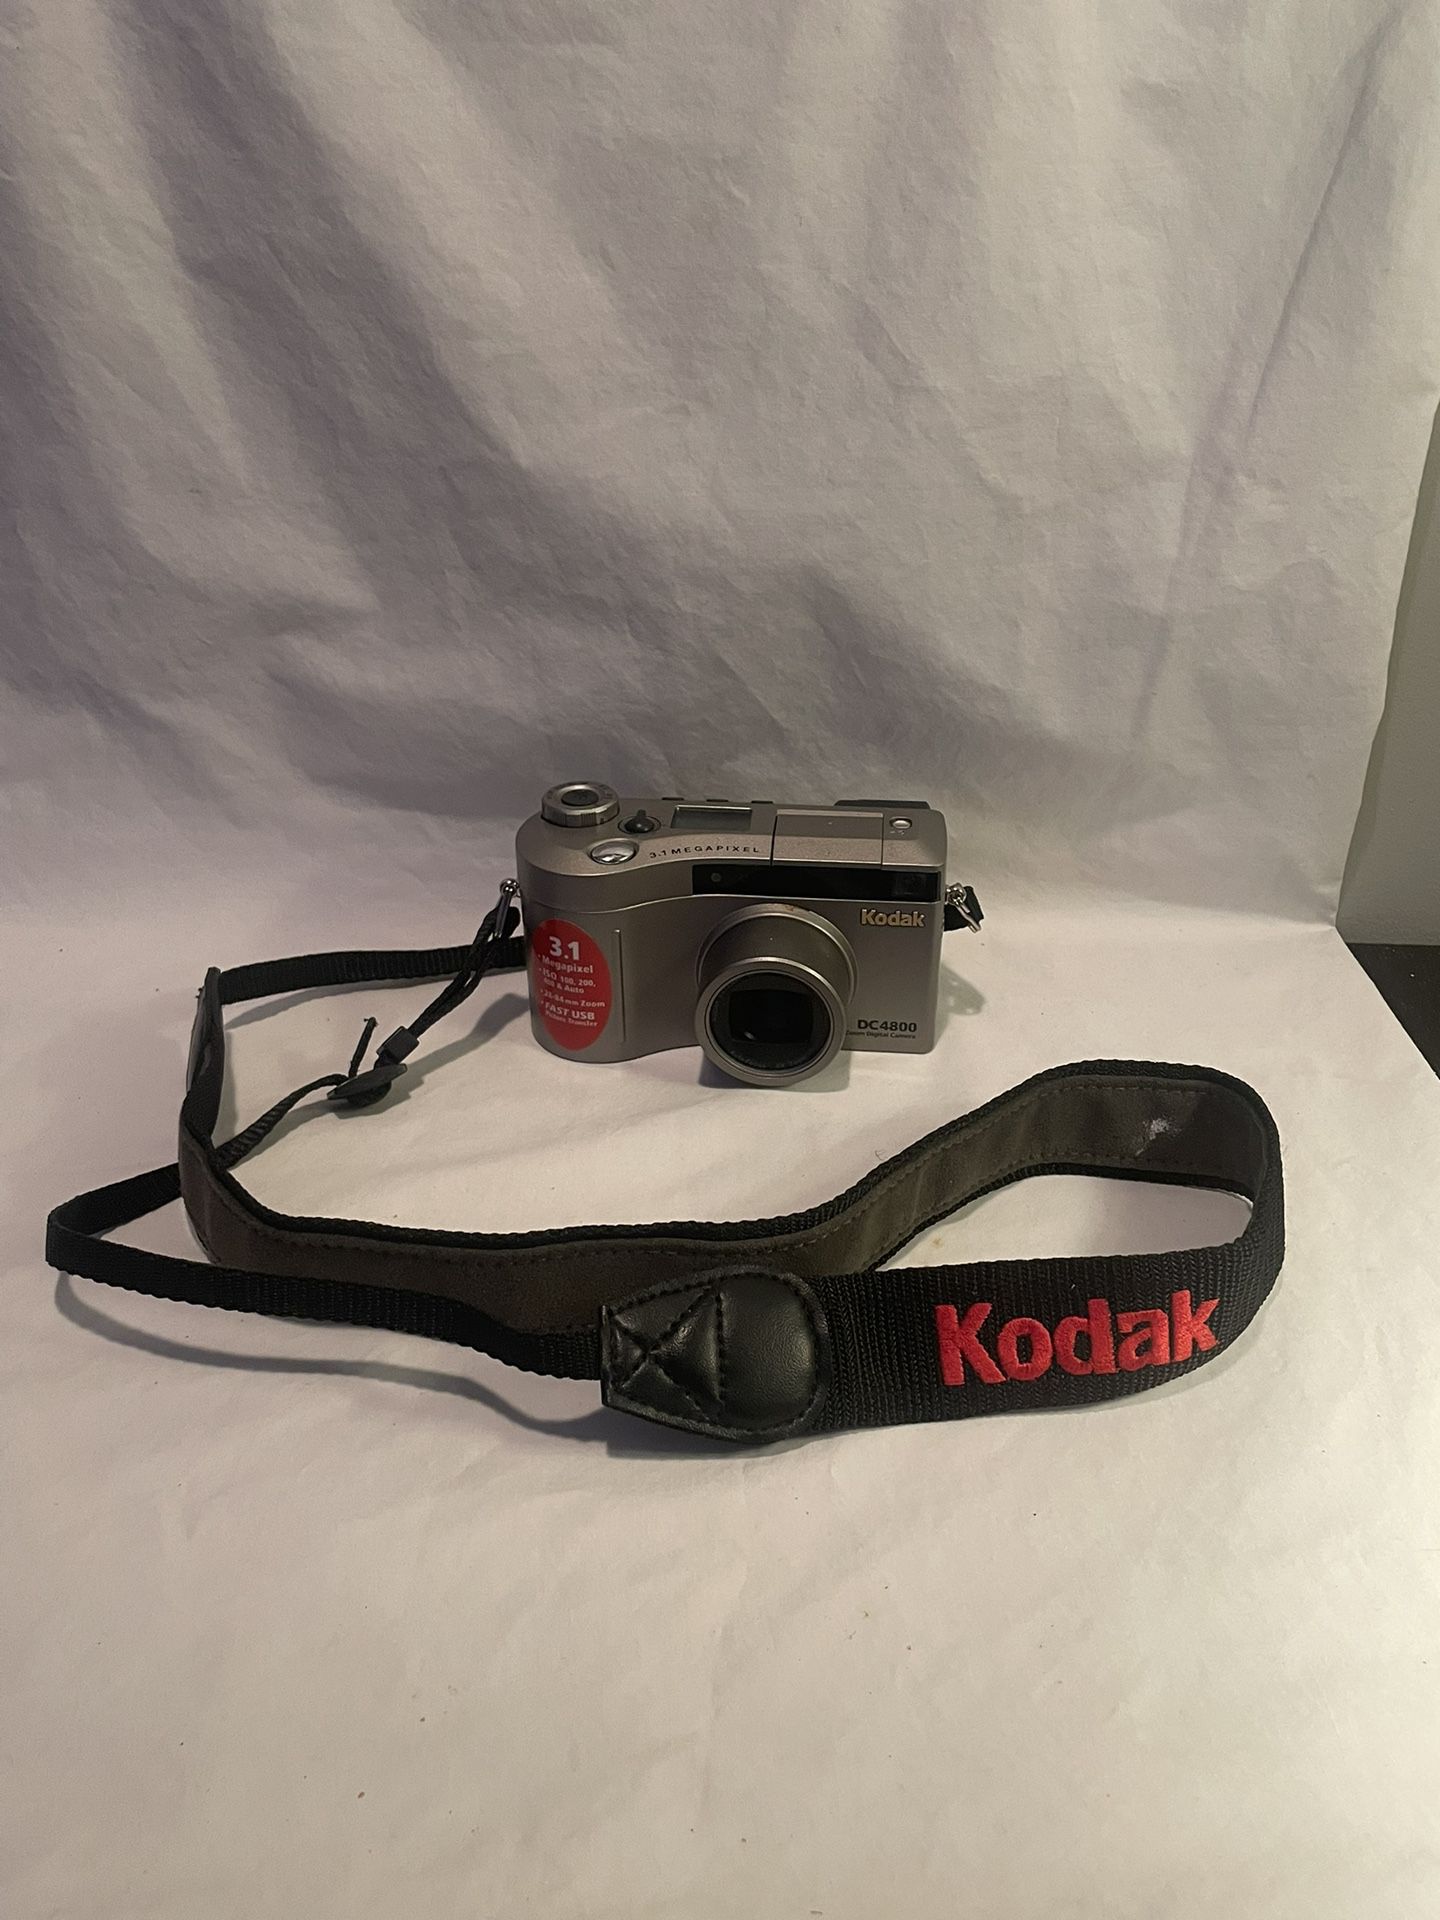 Kodak DC4800 3.1 MP Zoom Digital Camera With Strap